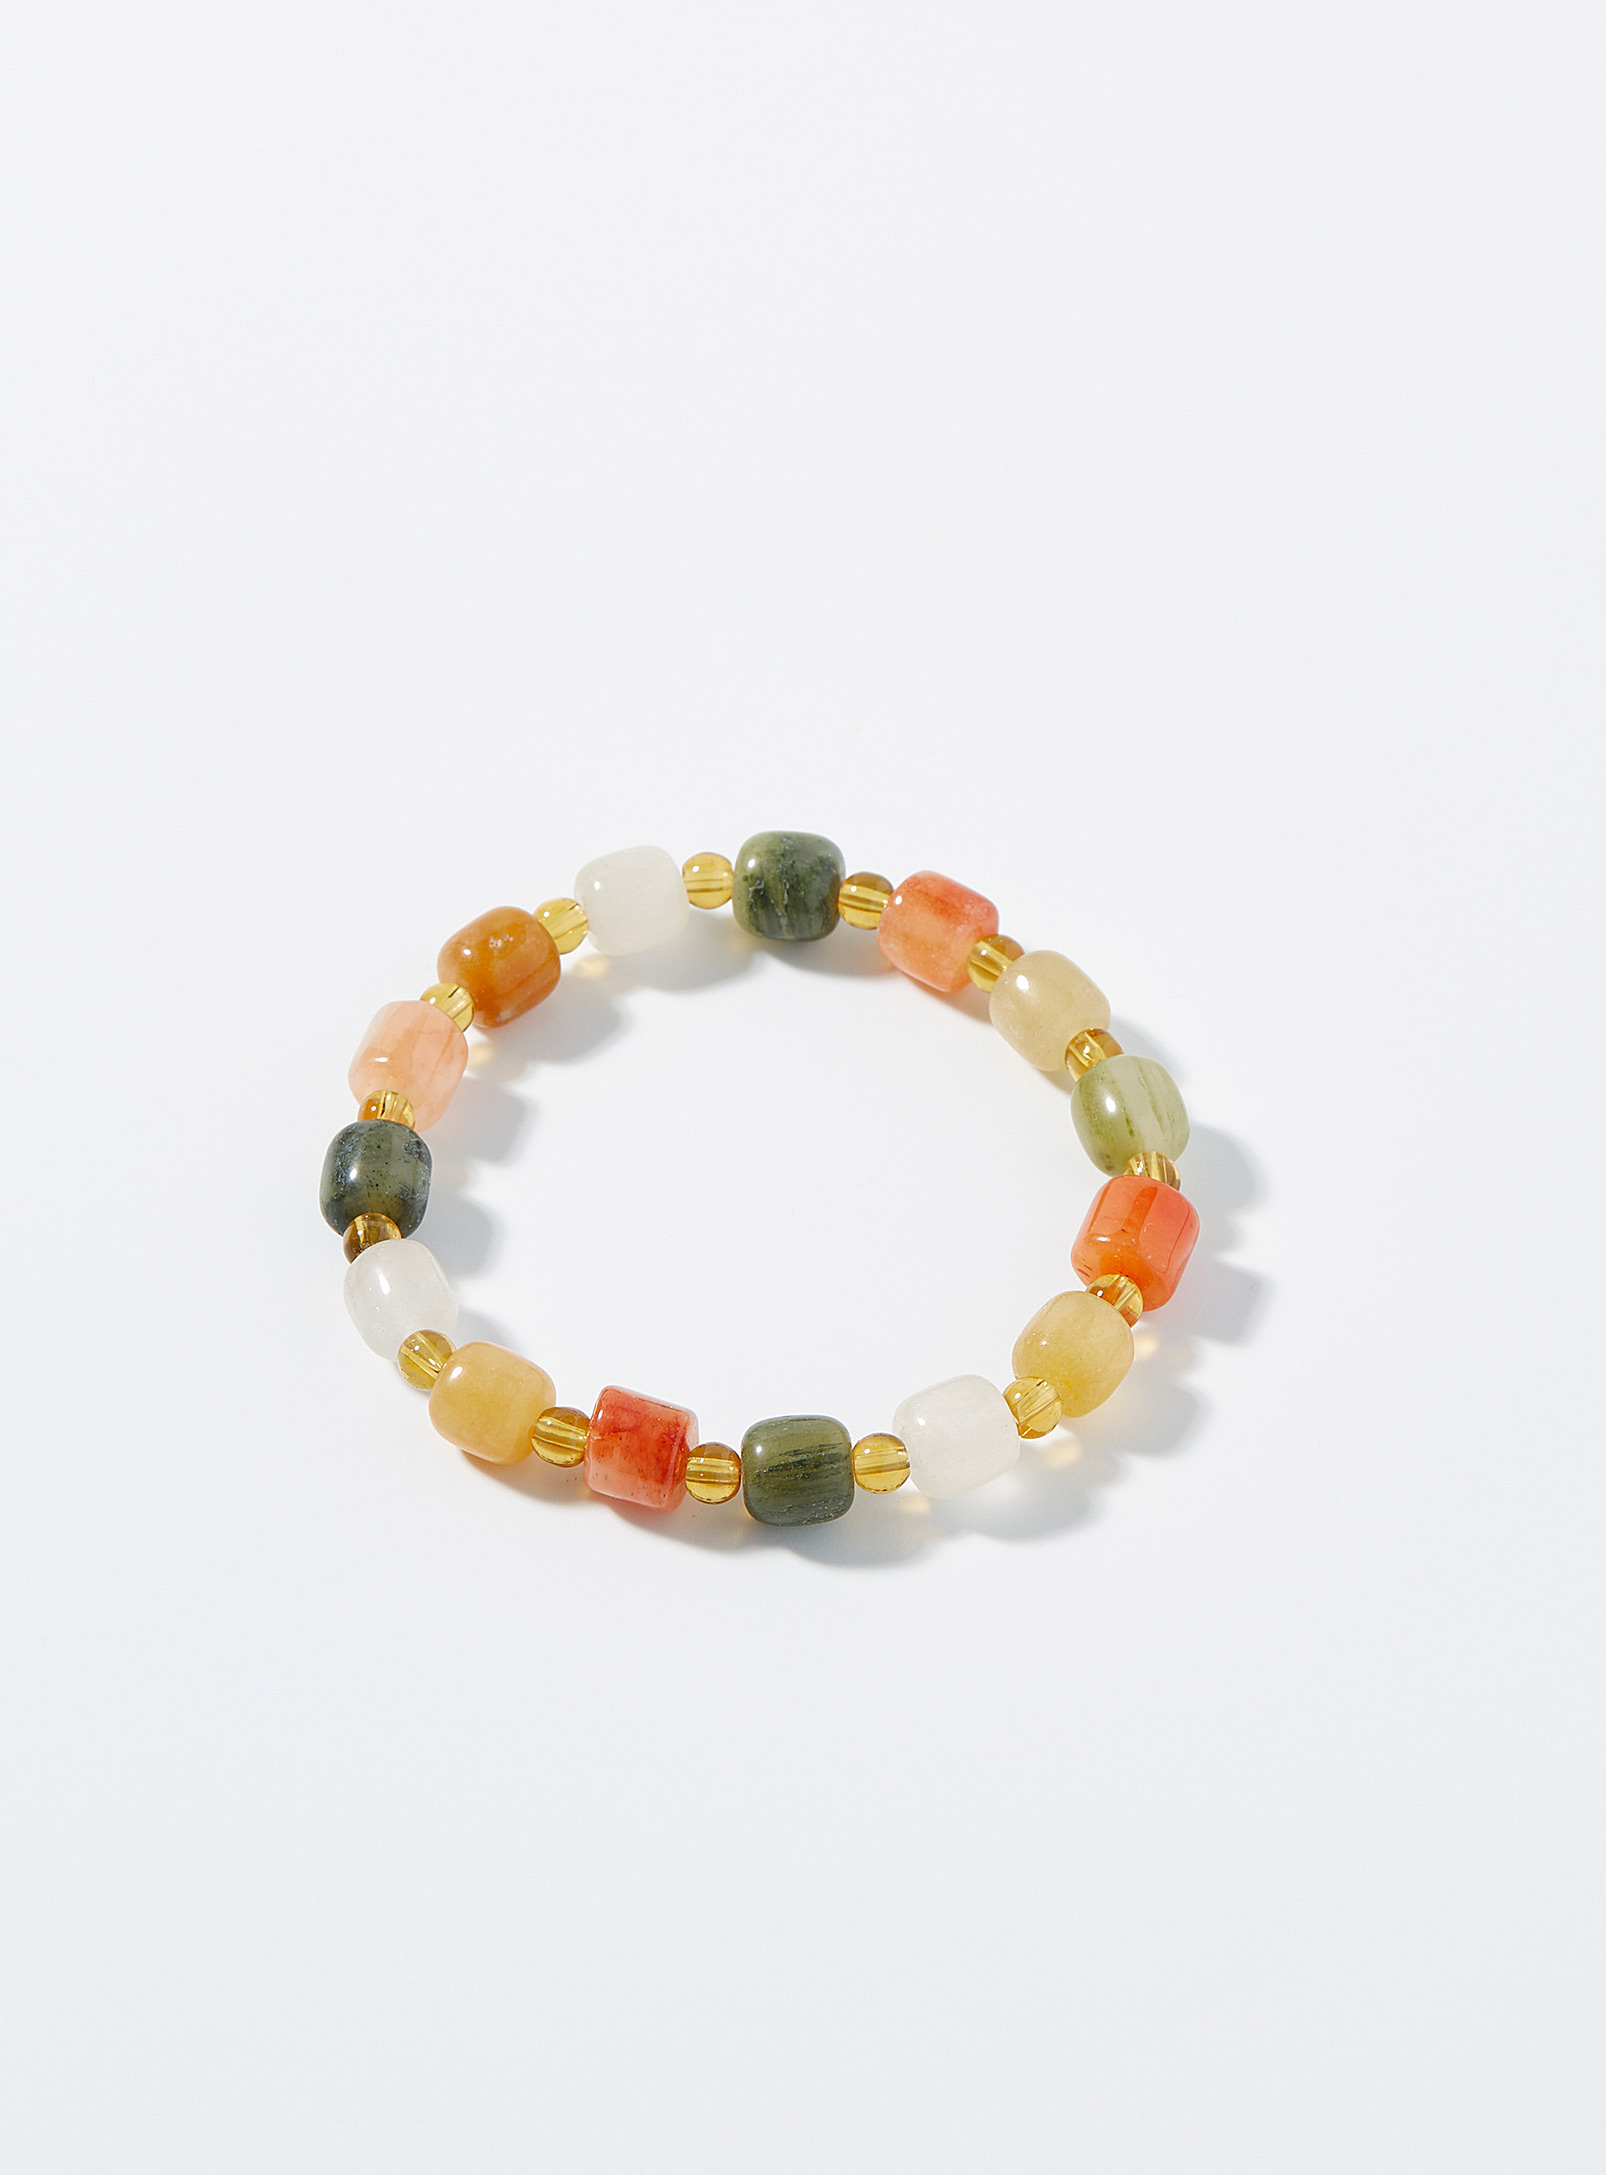 Simons - Women's Natural stone and bead bracelet